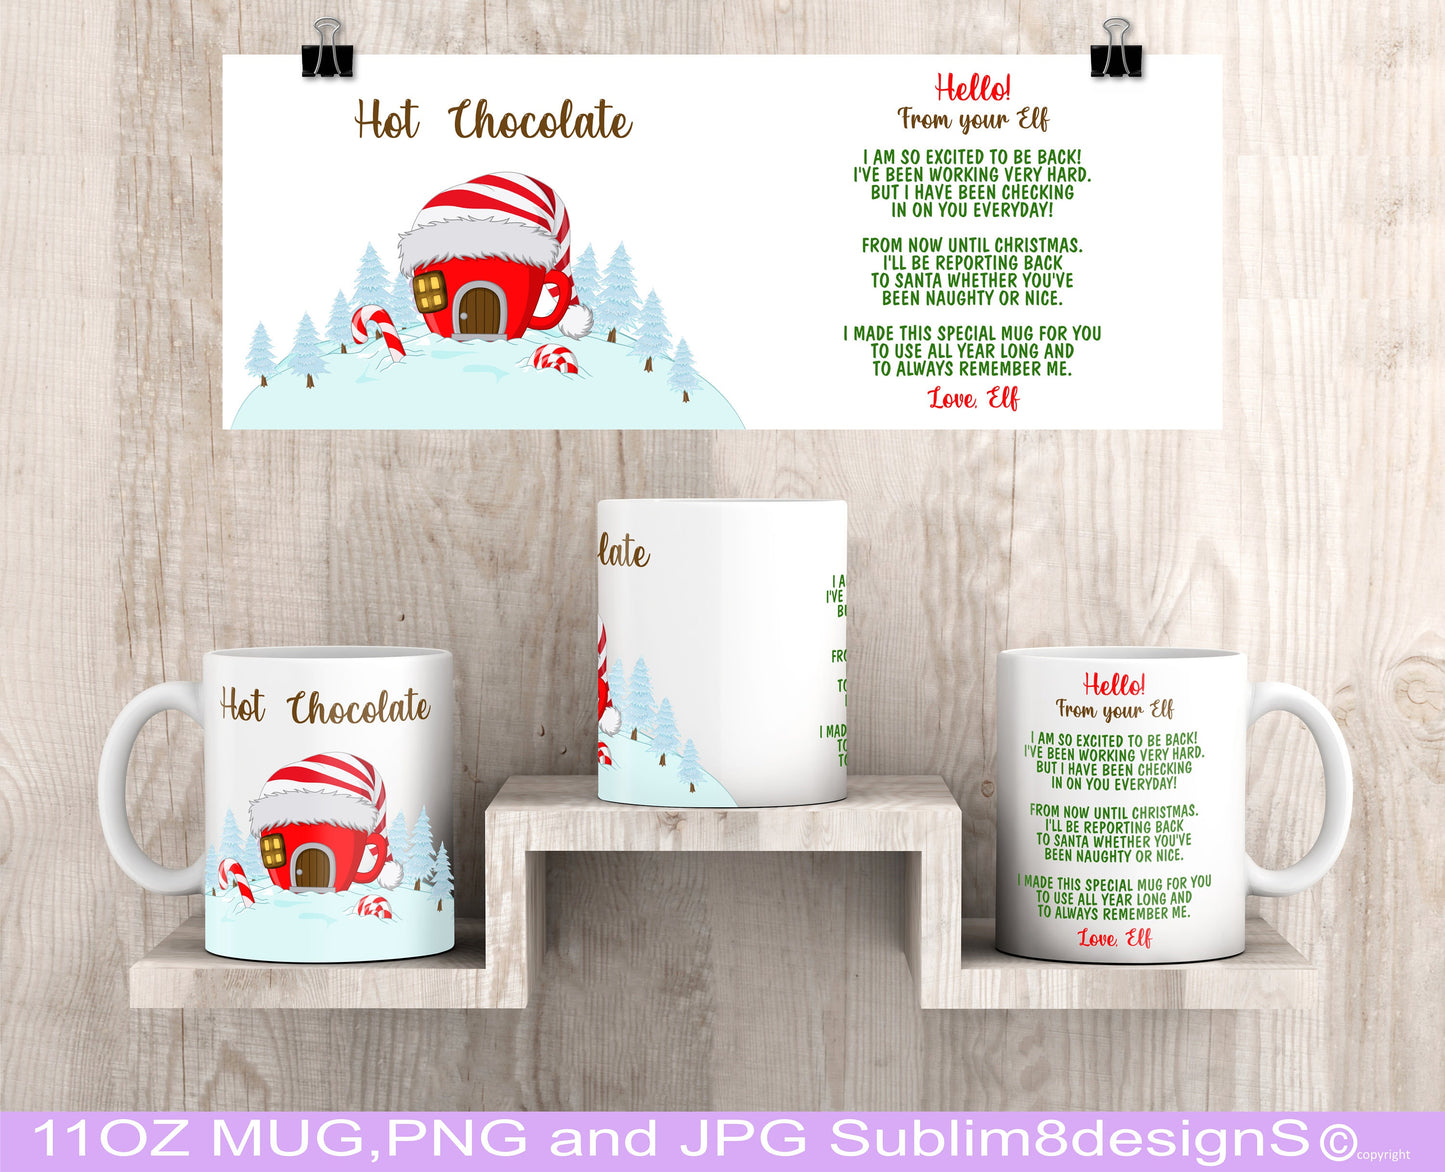 Your Special Christmas Elf Is Back - Christmas Elf Hot Chocolate 11oz Mug Sublimation Wrap Designs